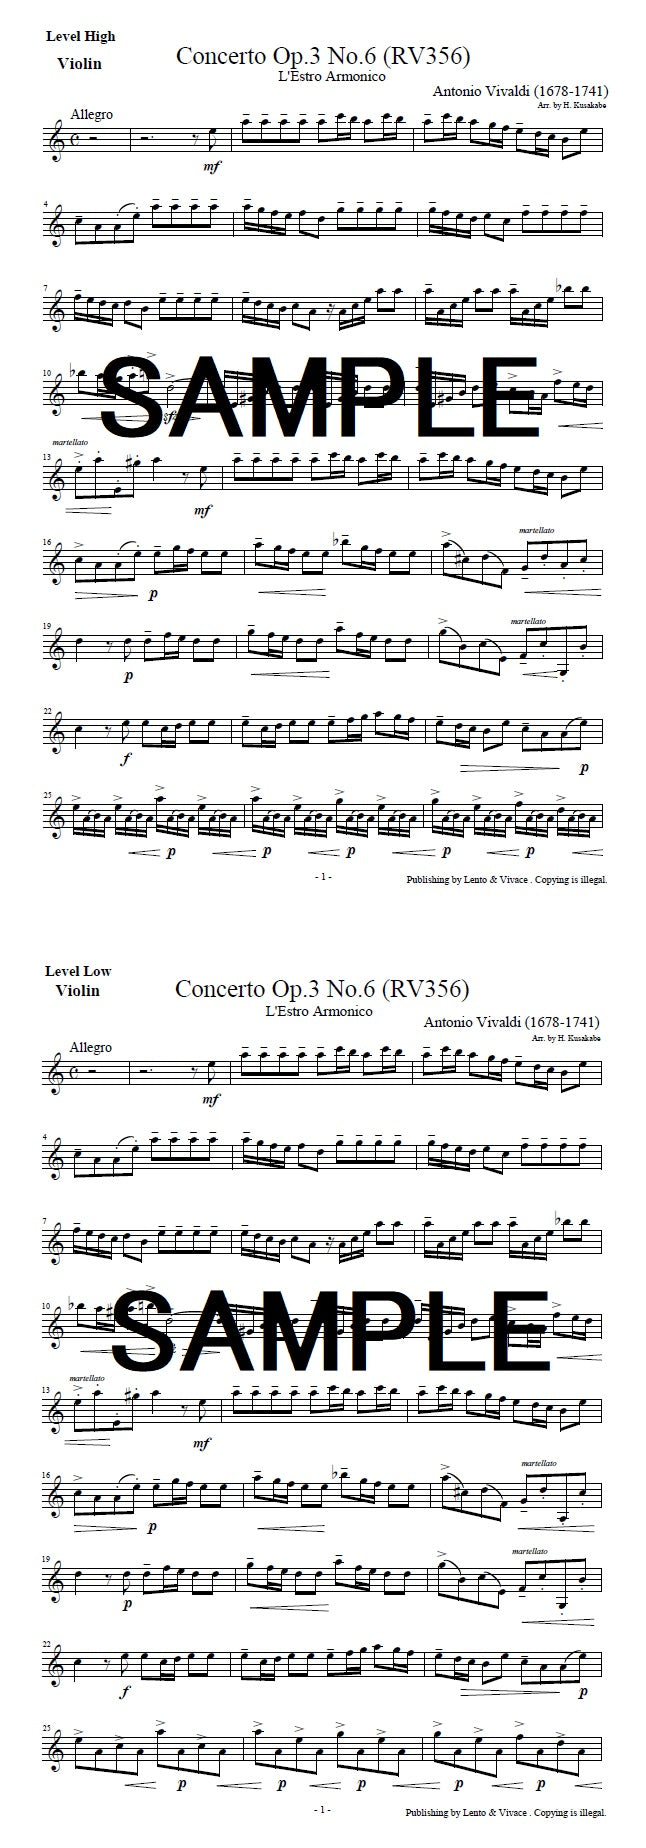 Antonio Vivaldi "Concierto en la menor, L'estro Armonic Op.3 No. 6"